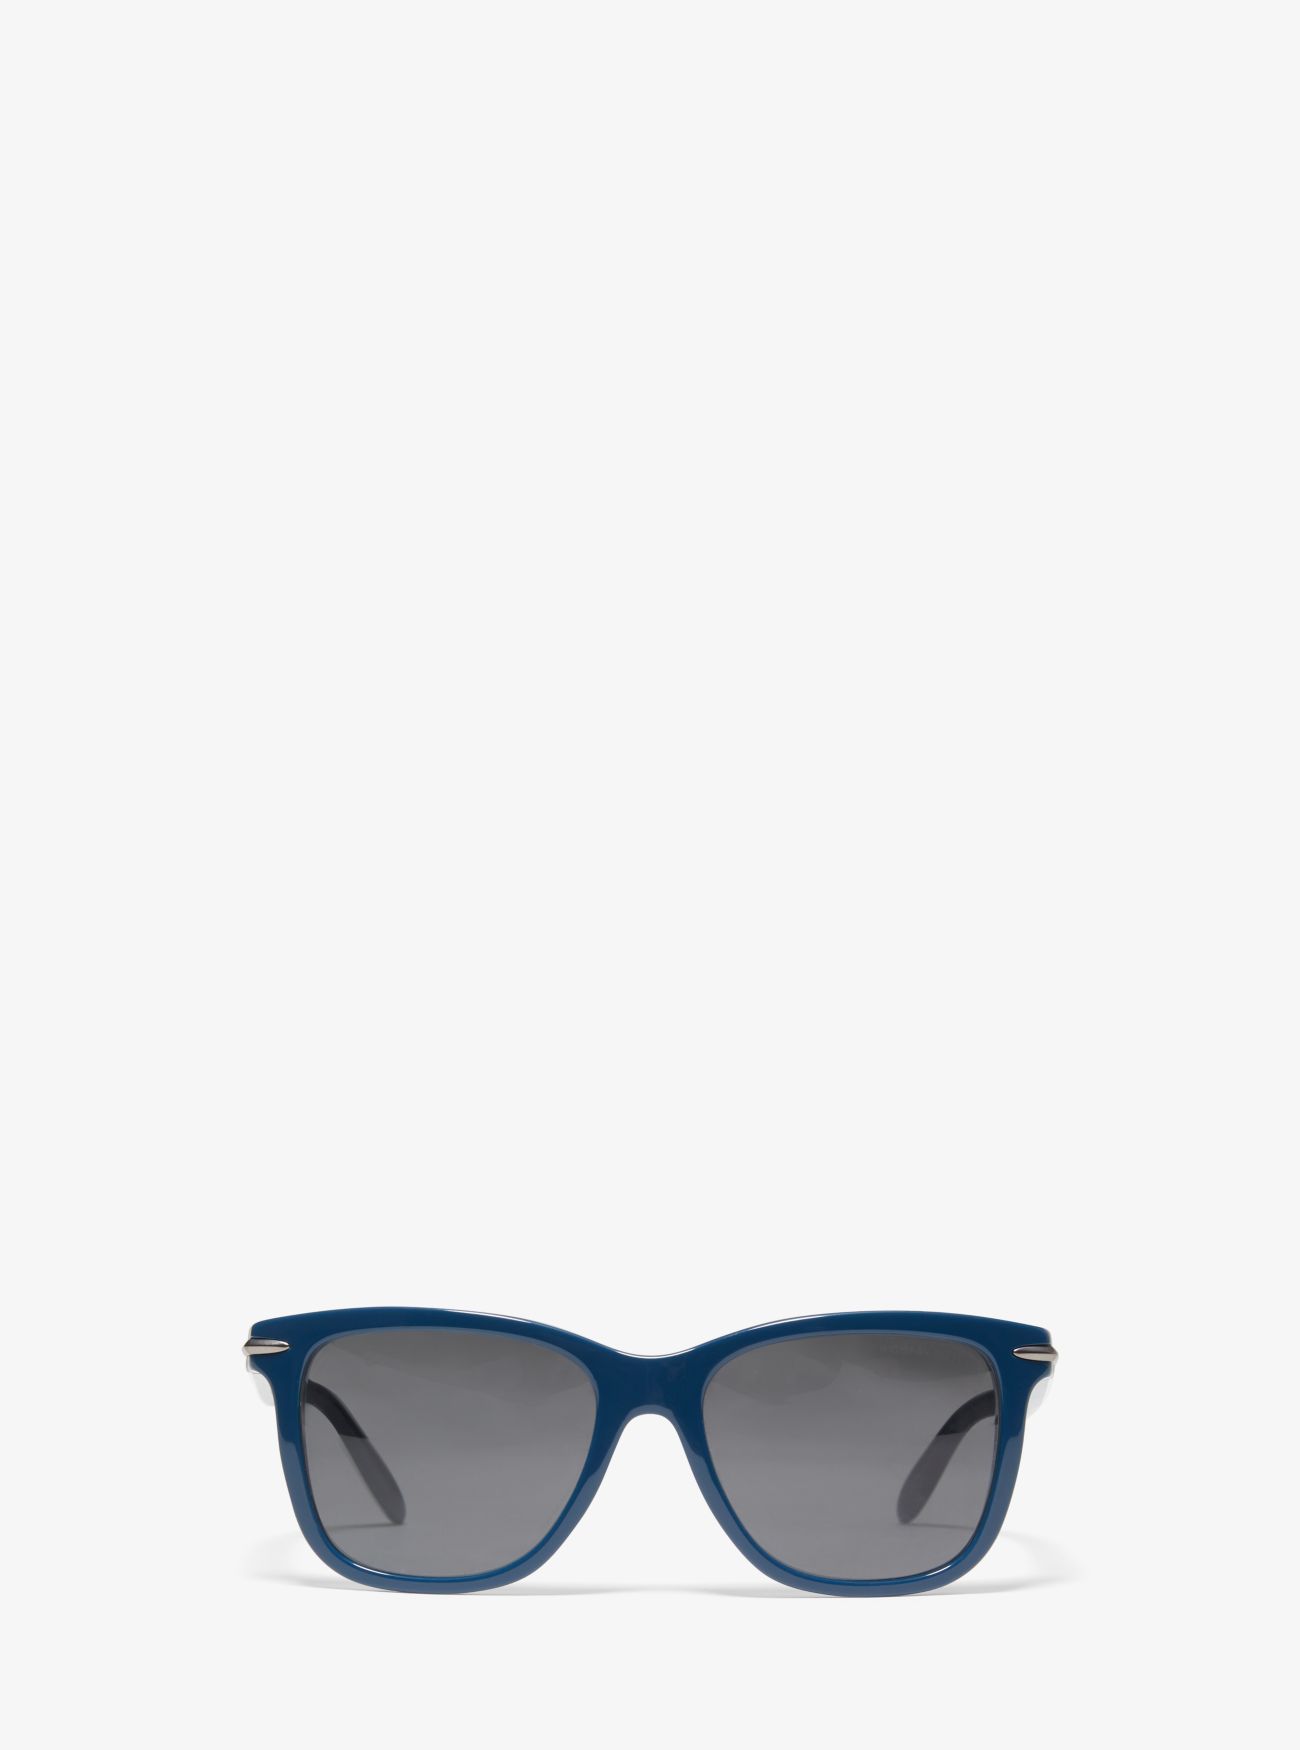 MK Telluride Sunglasses - Blue - Michael Kors